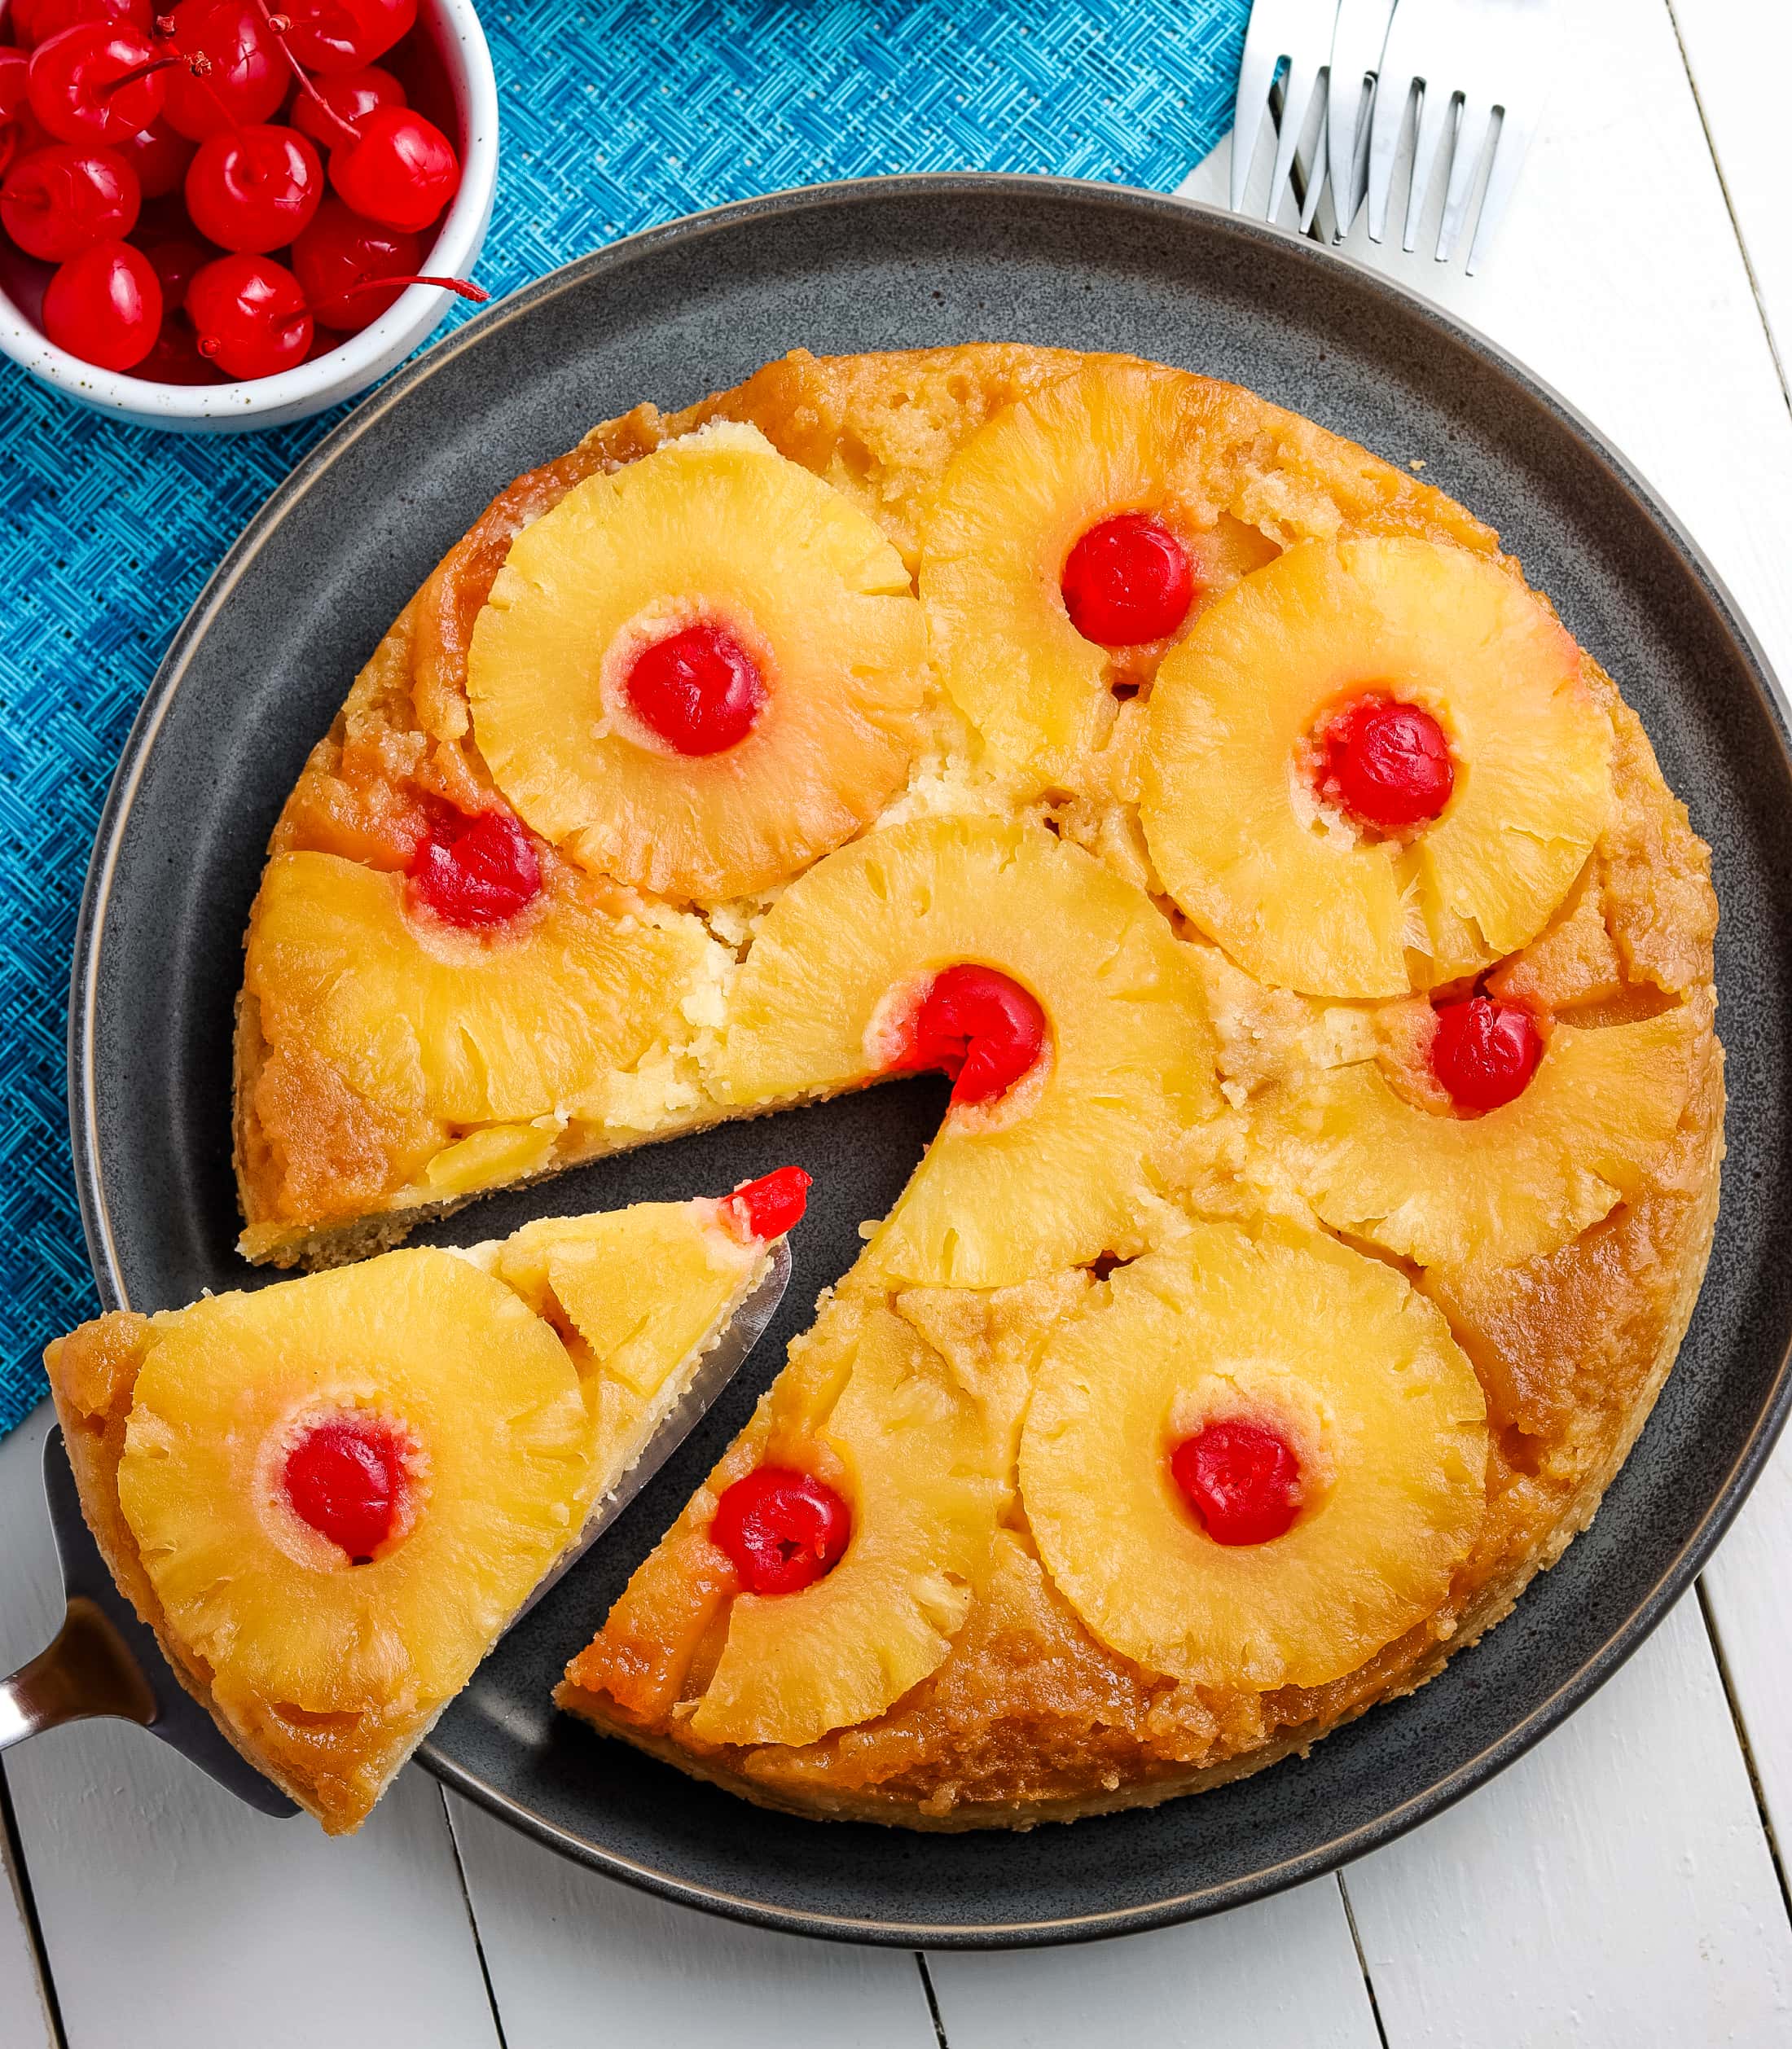 https://www.mommyhatescooking.com/wp-content/uploads/2021/04/Pineapple-Upside-Down-Cake-Kristy-Final-4.jpg